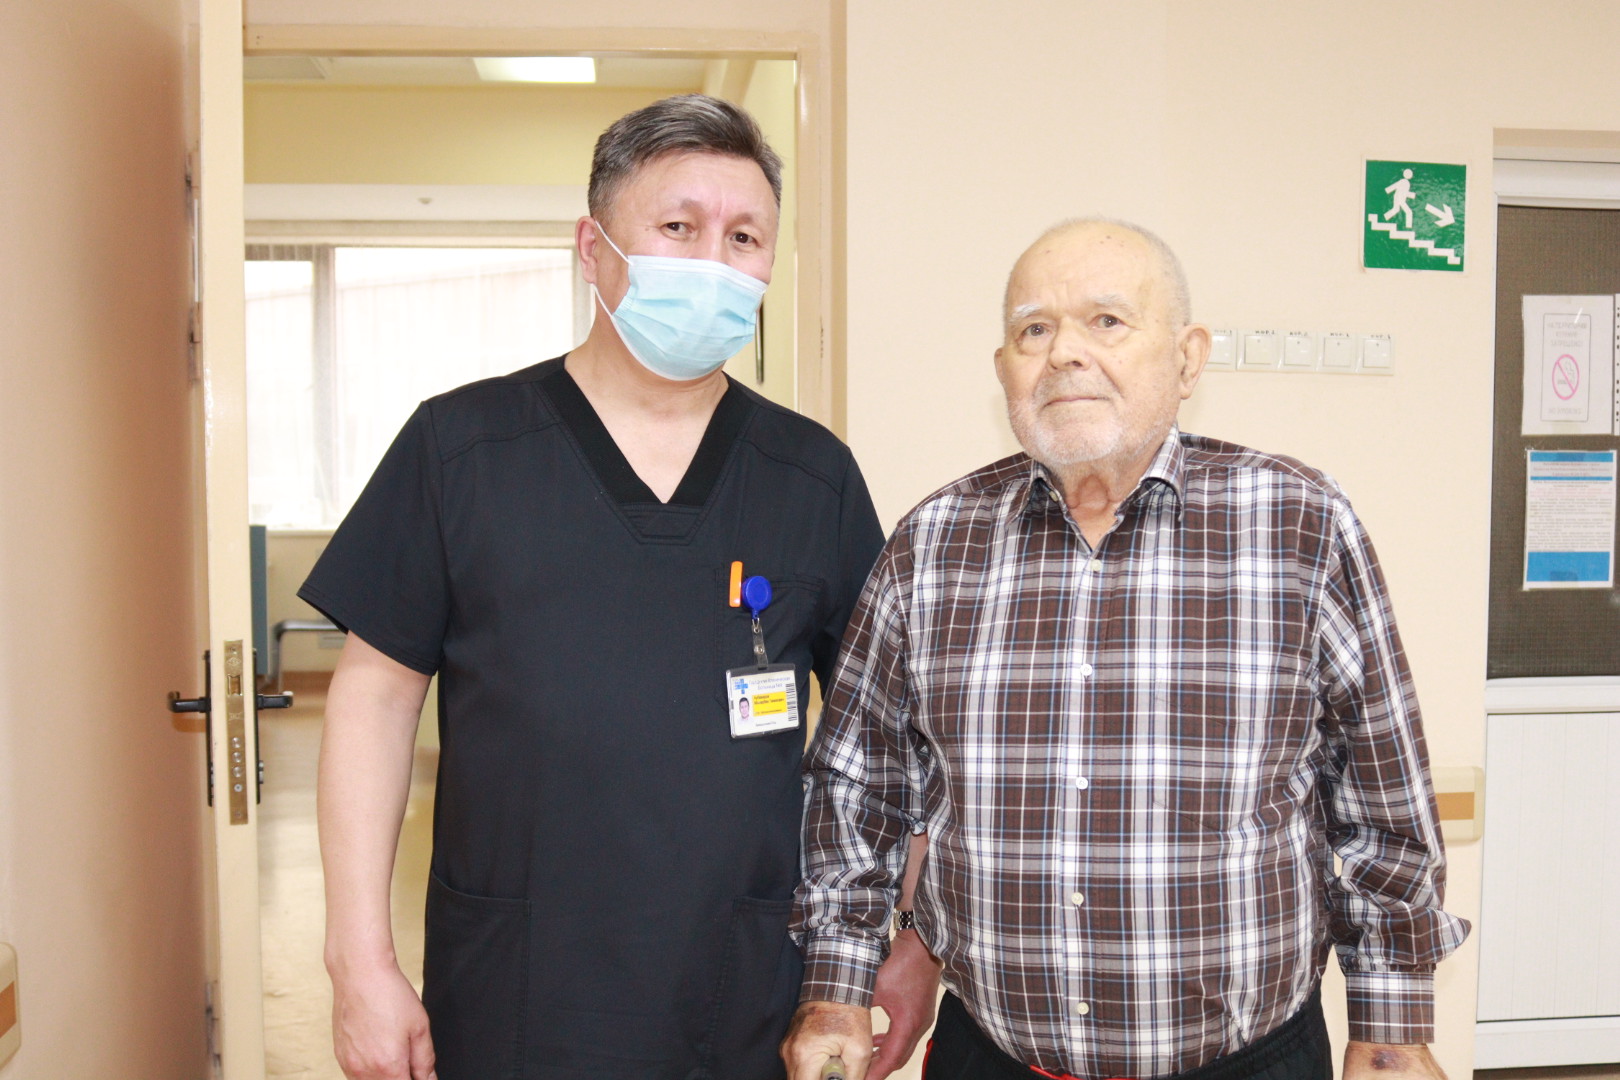 Операция замена головы. Мехдат 70 лет врач Алматы.